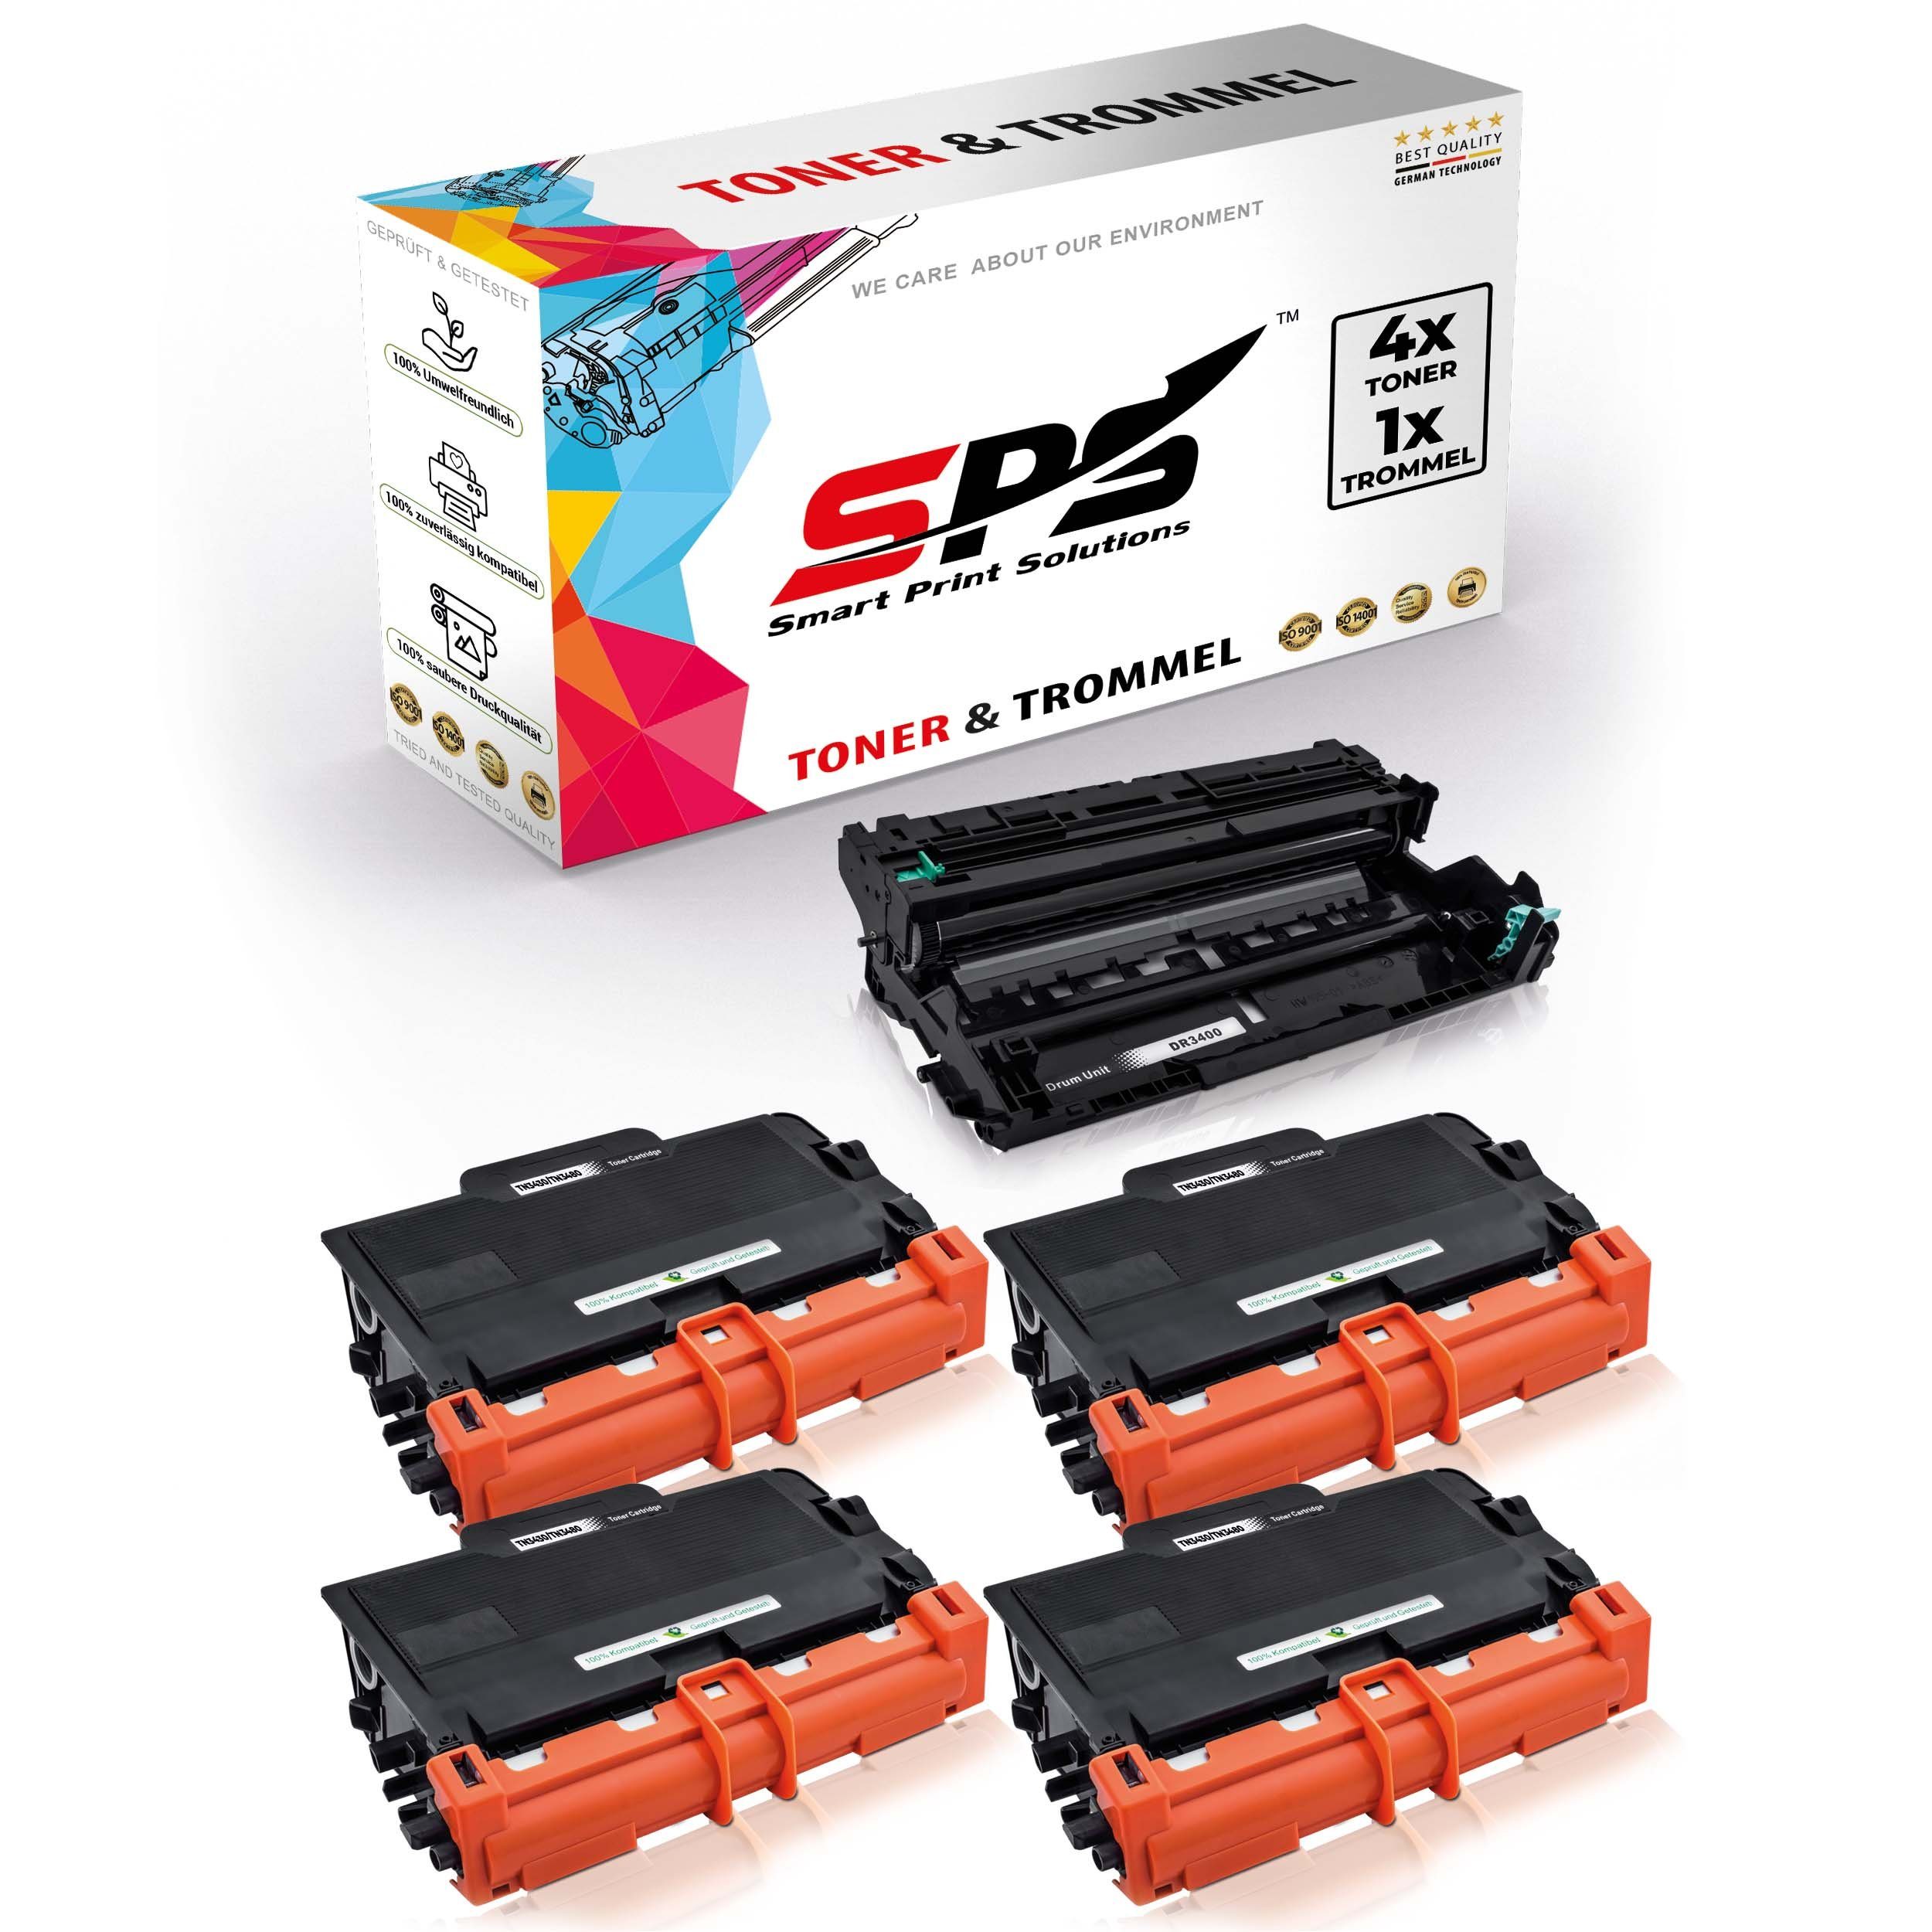 SPS Tonerkartusche Kompatibel für Brother DCP-L5600 DR-3400 TN-3430, (5er Pack) | Tonerpatronen